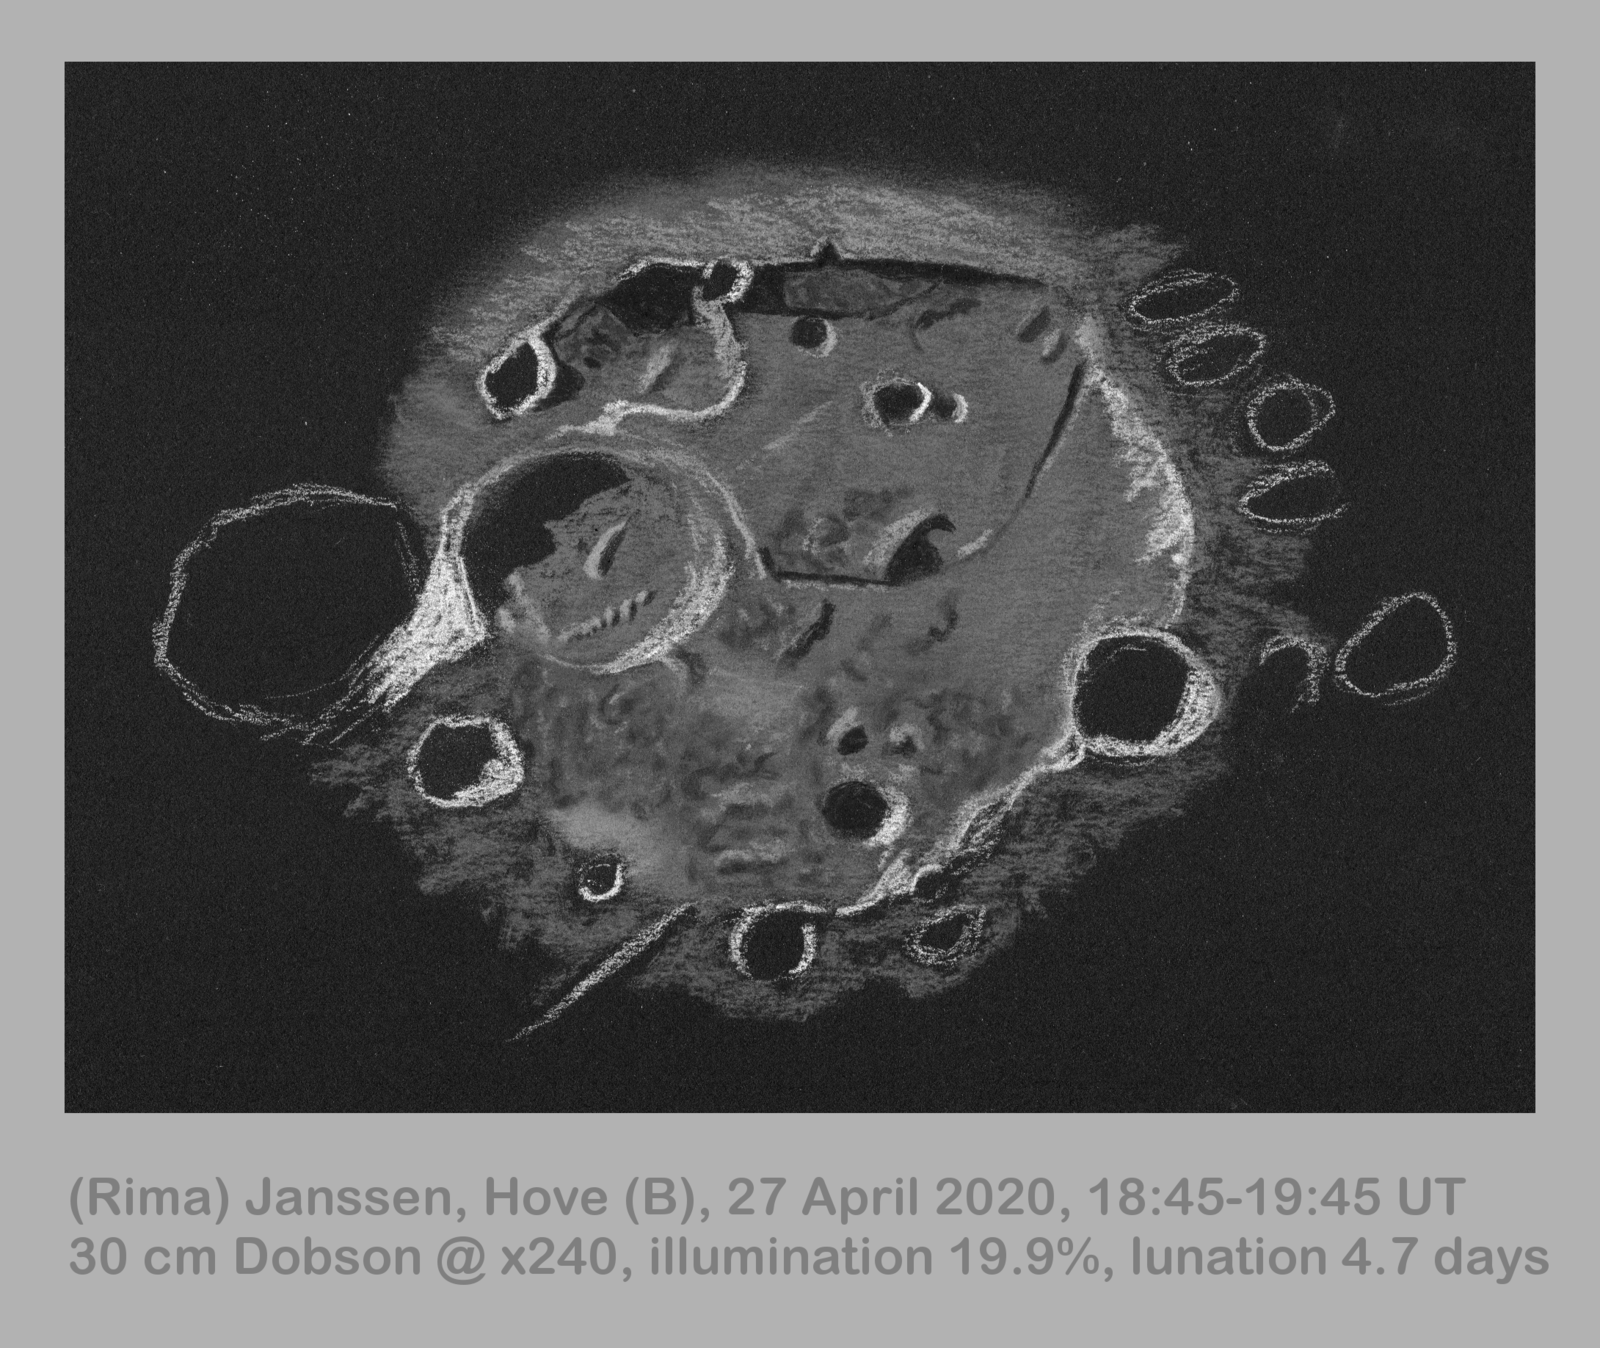 Lunar 040: Rimae Janssen (rare example of a highland rille)